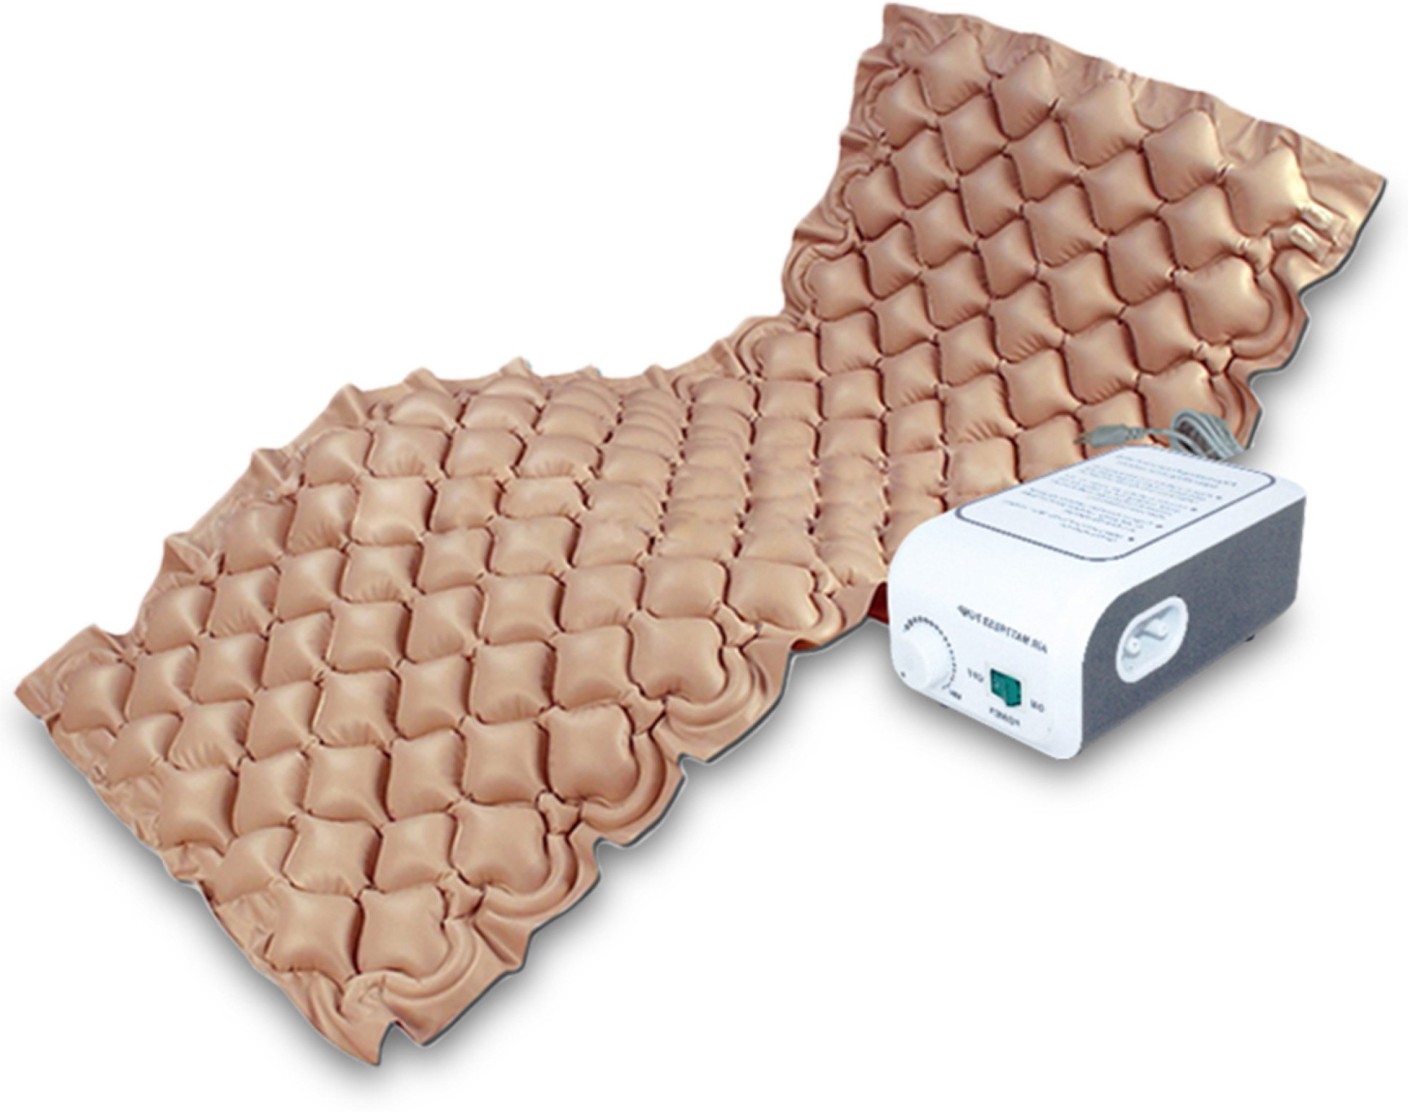 foam mattress to prevent bed sores